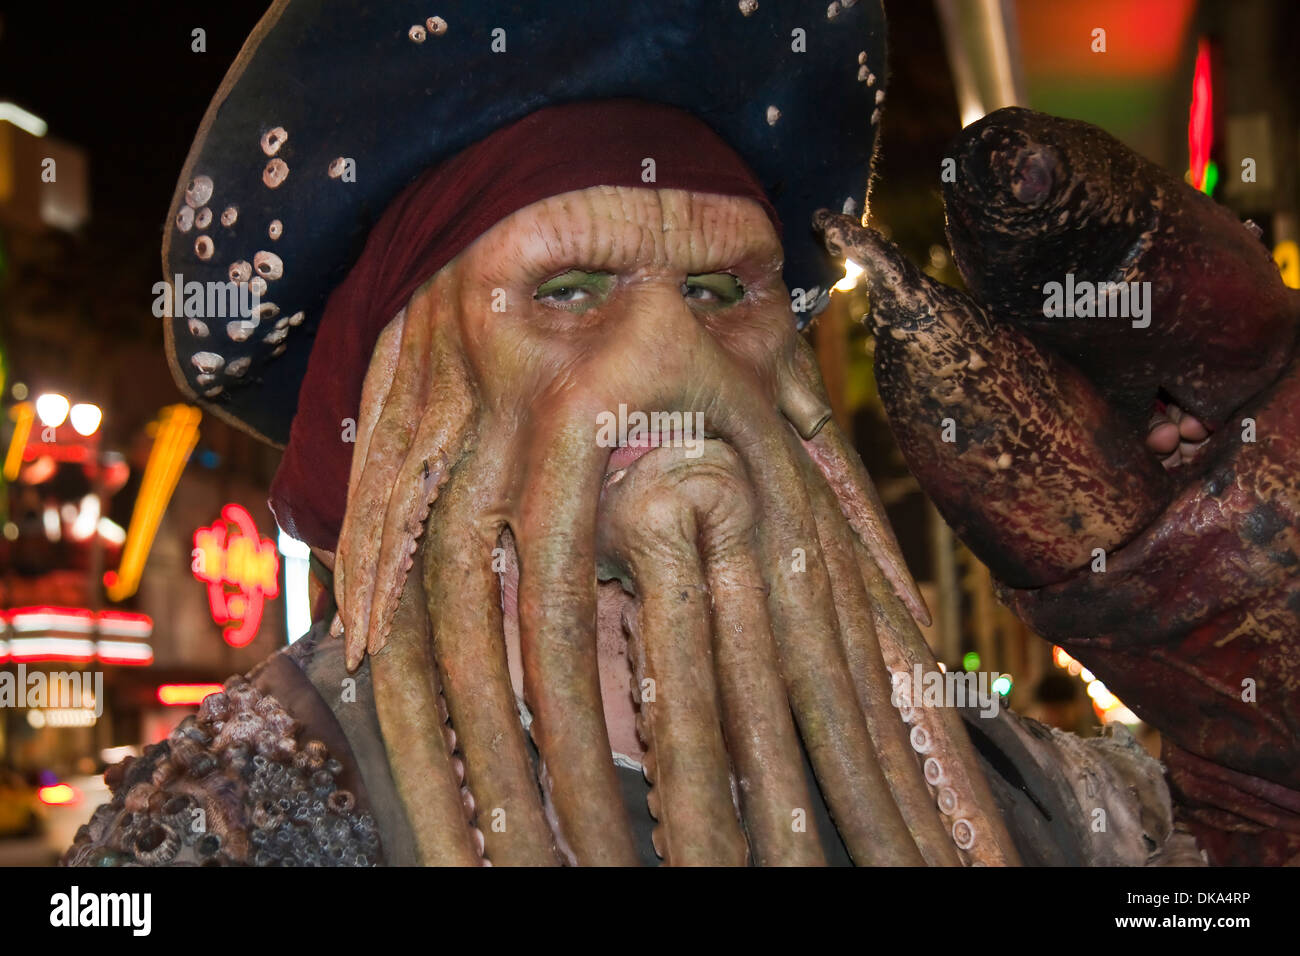 Davy Jones as a human (concept art) : r/piratesofthecaribbean